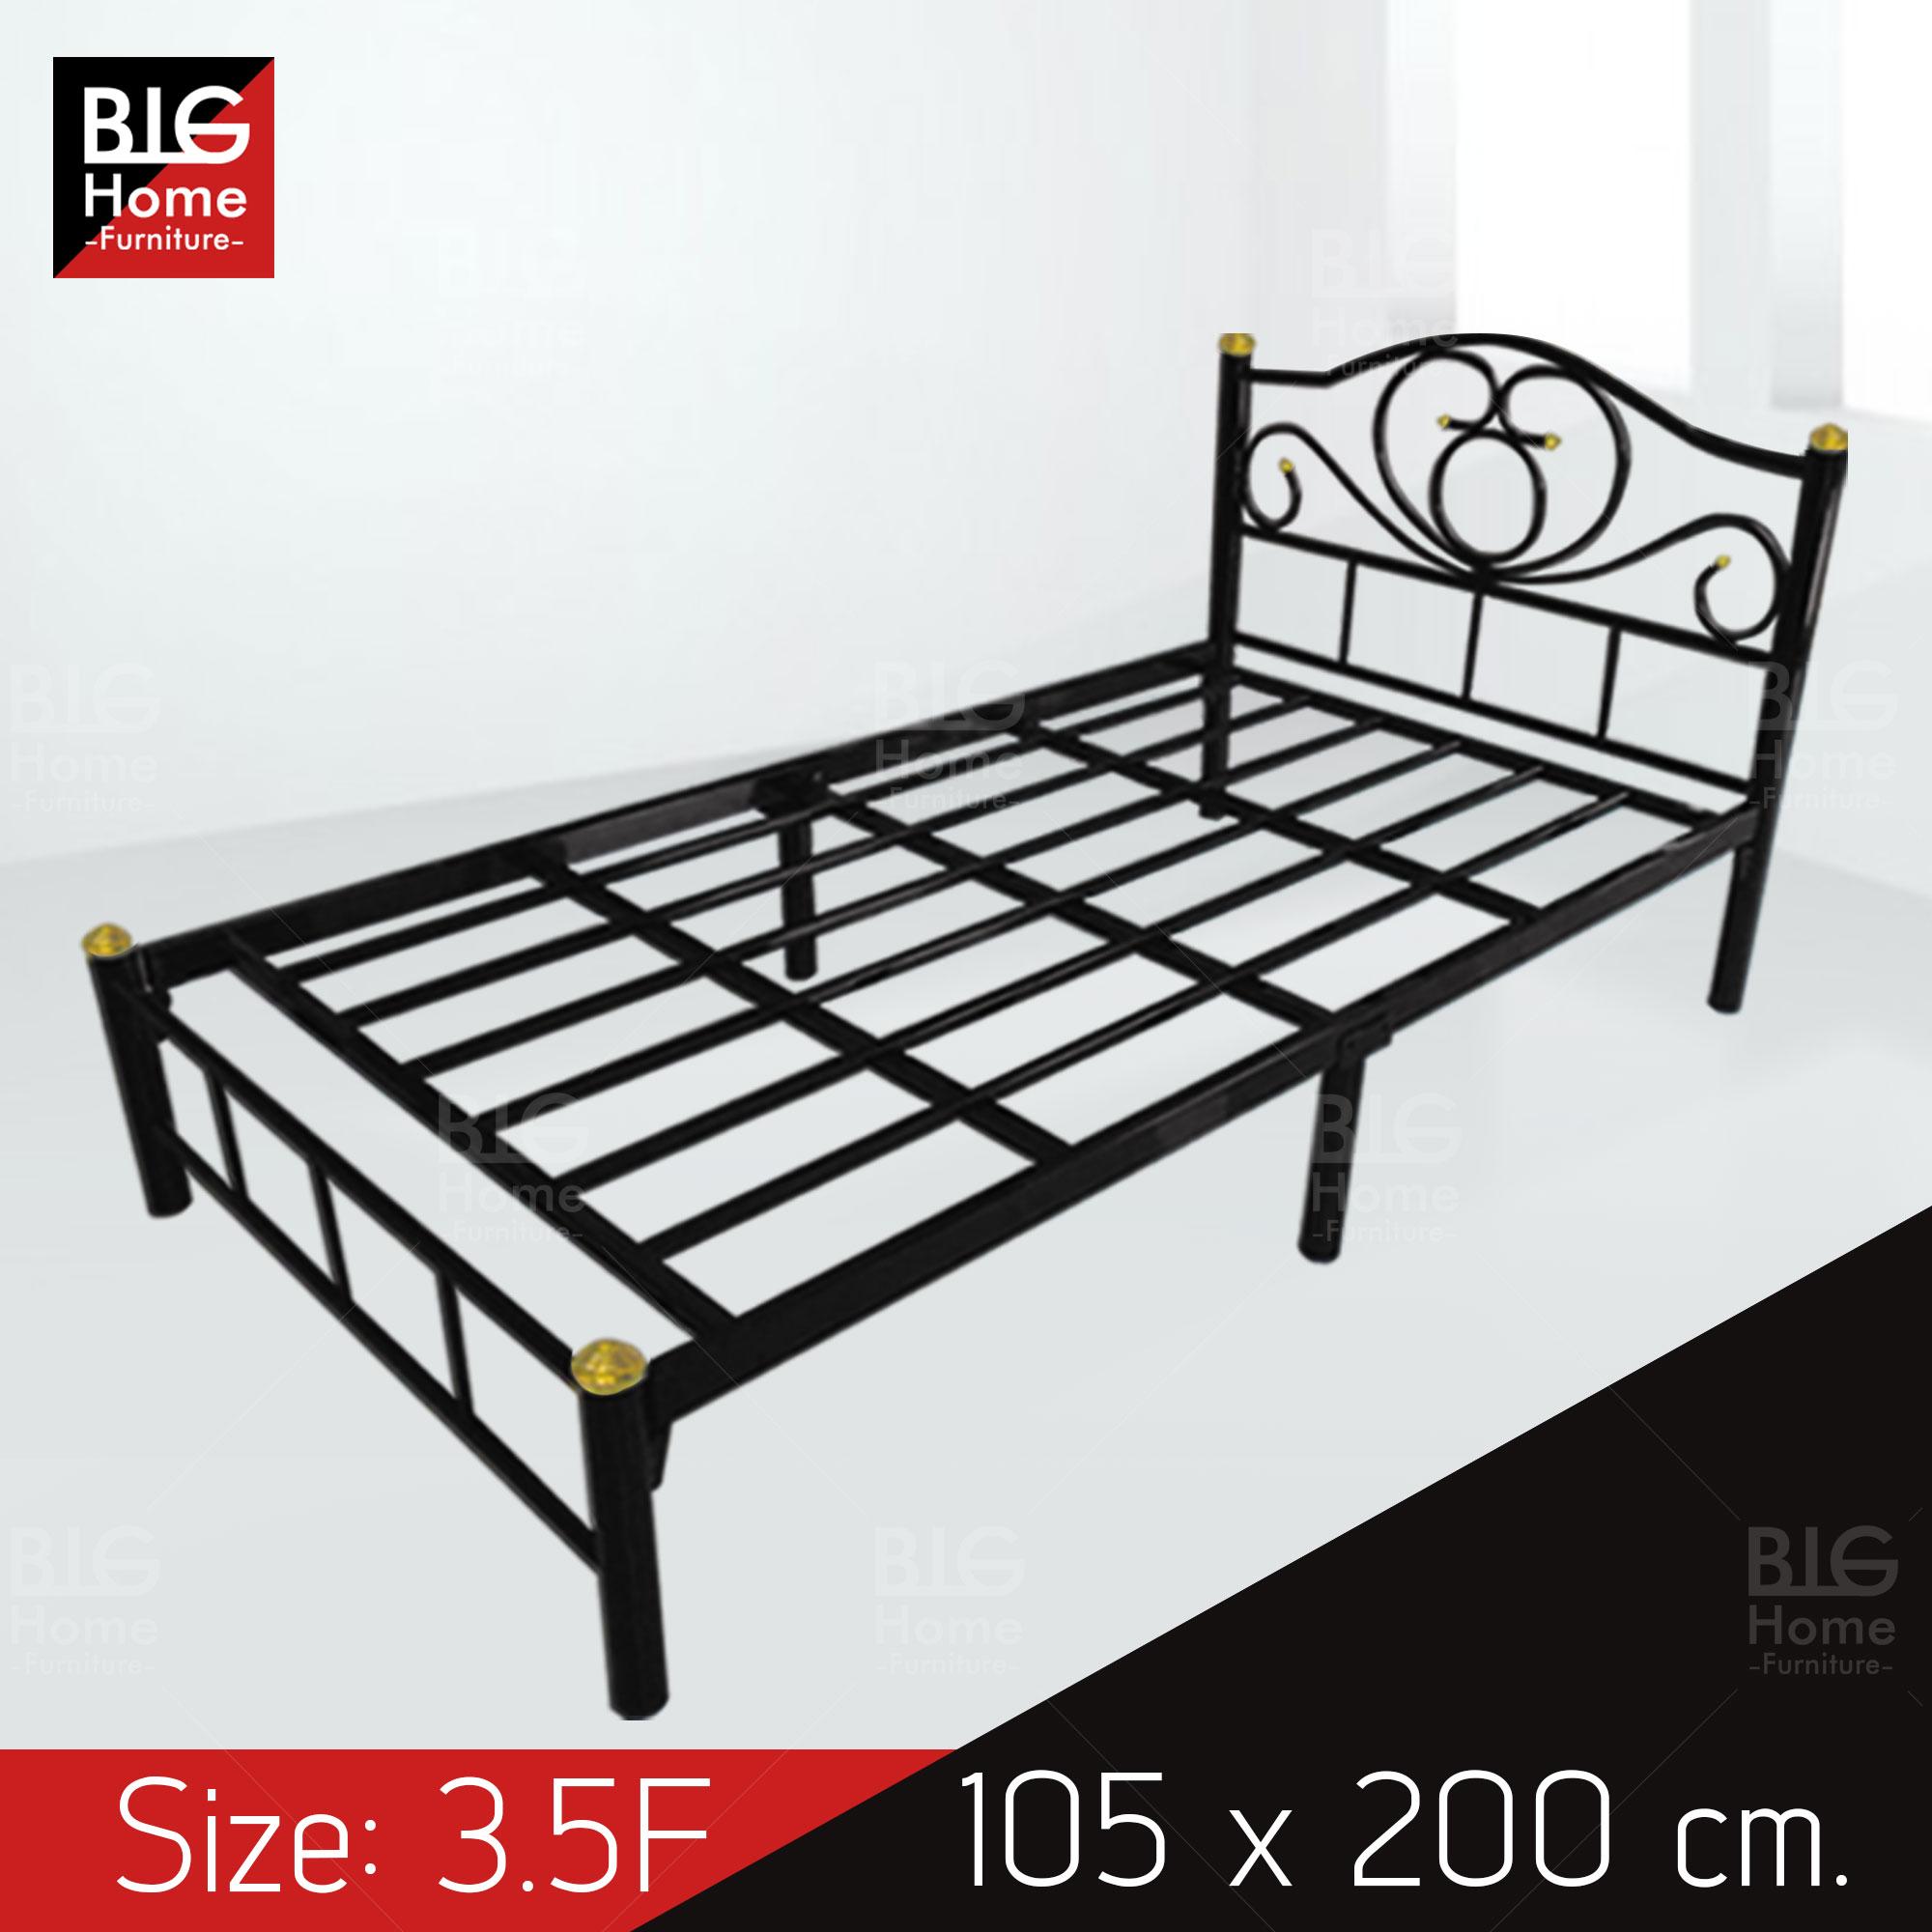 BH เตียงเหล็ก 3.5ฟุต ขา2นิ้ว ลายโลตัส เหมาะสำหรับนอน1ท่าน (จัดส่งฟรี+ชำระปลายทางได้)